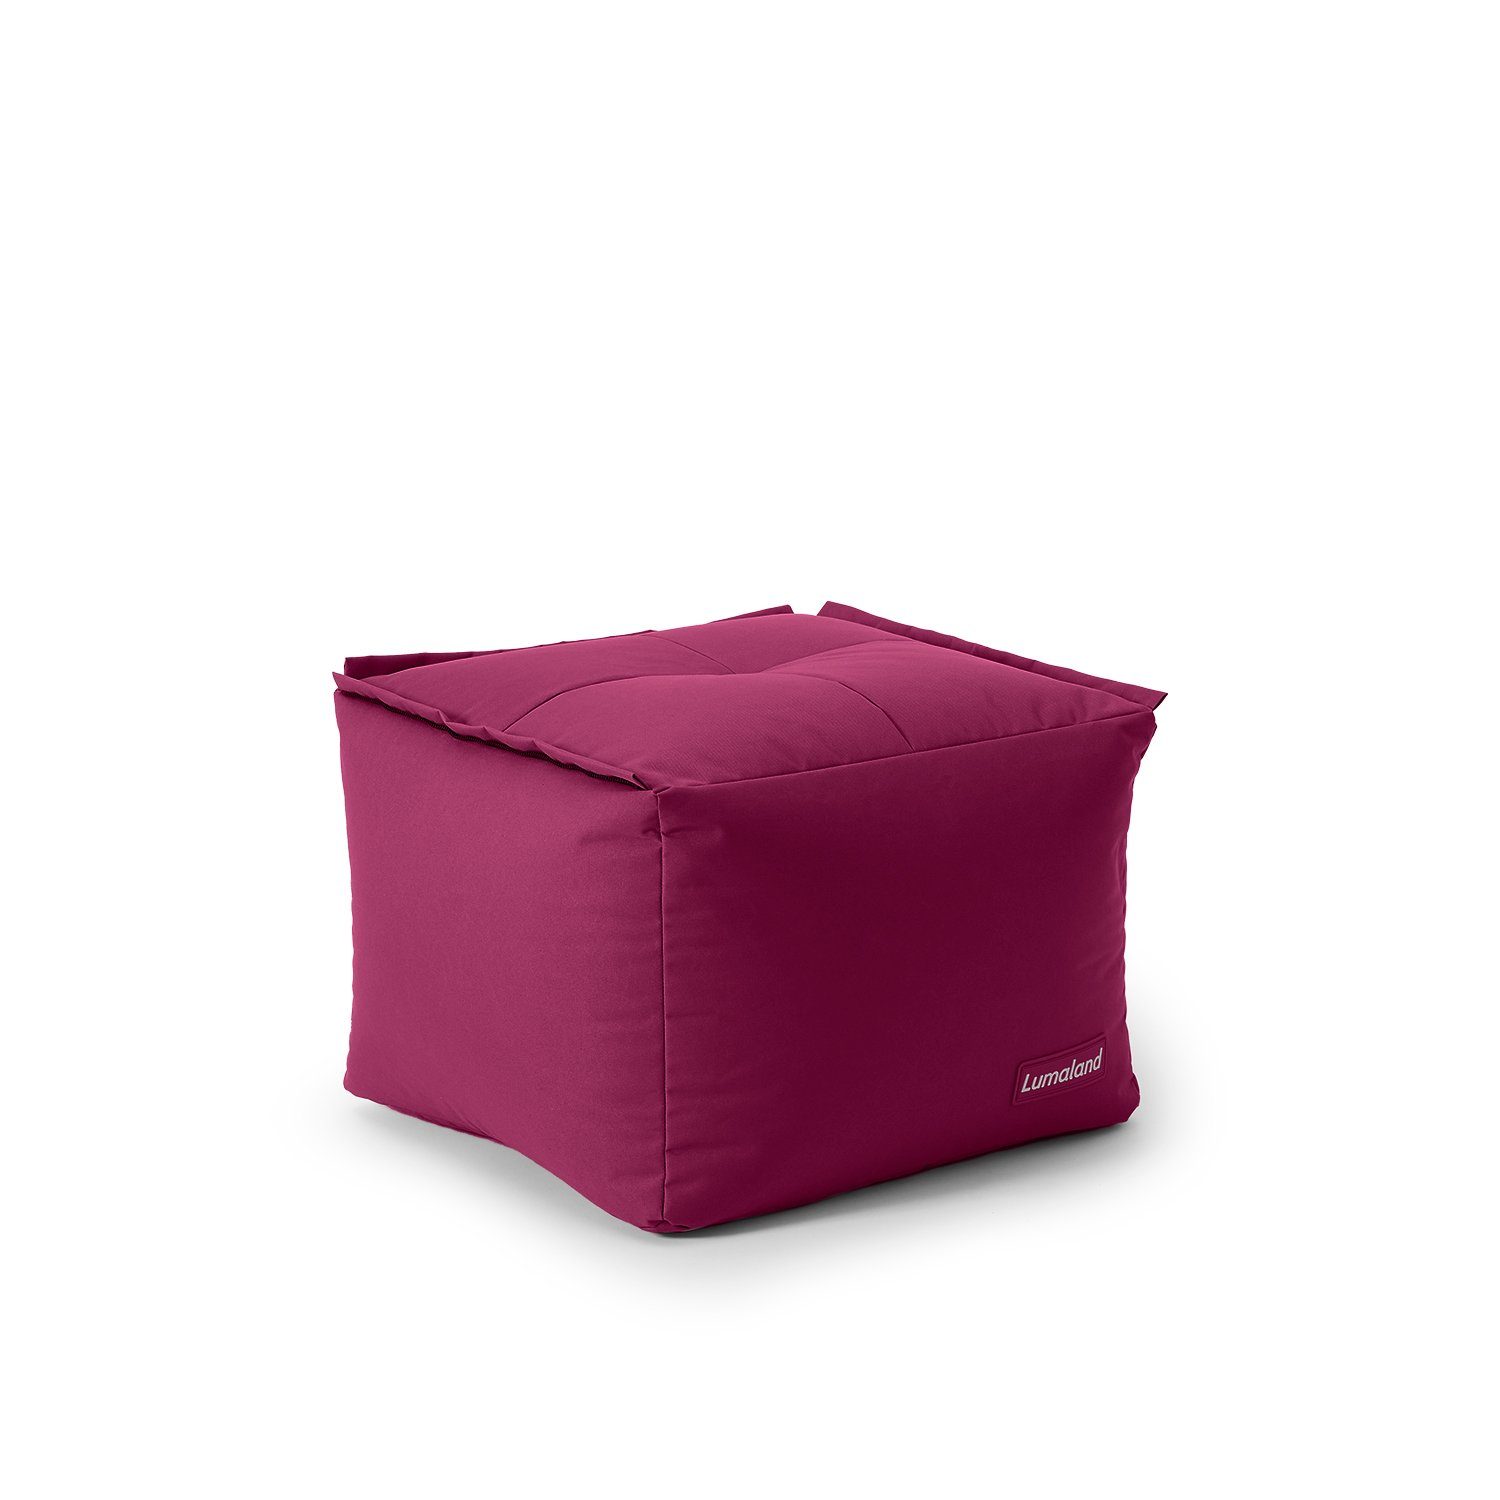 Lumaland Loungeset In- & outdoor Sofa individuell kombinierbar mit dem Modularen System, Sessel wasserfest abnehmbarer Bezug erweiterbar waschbar rotwein